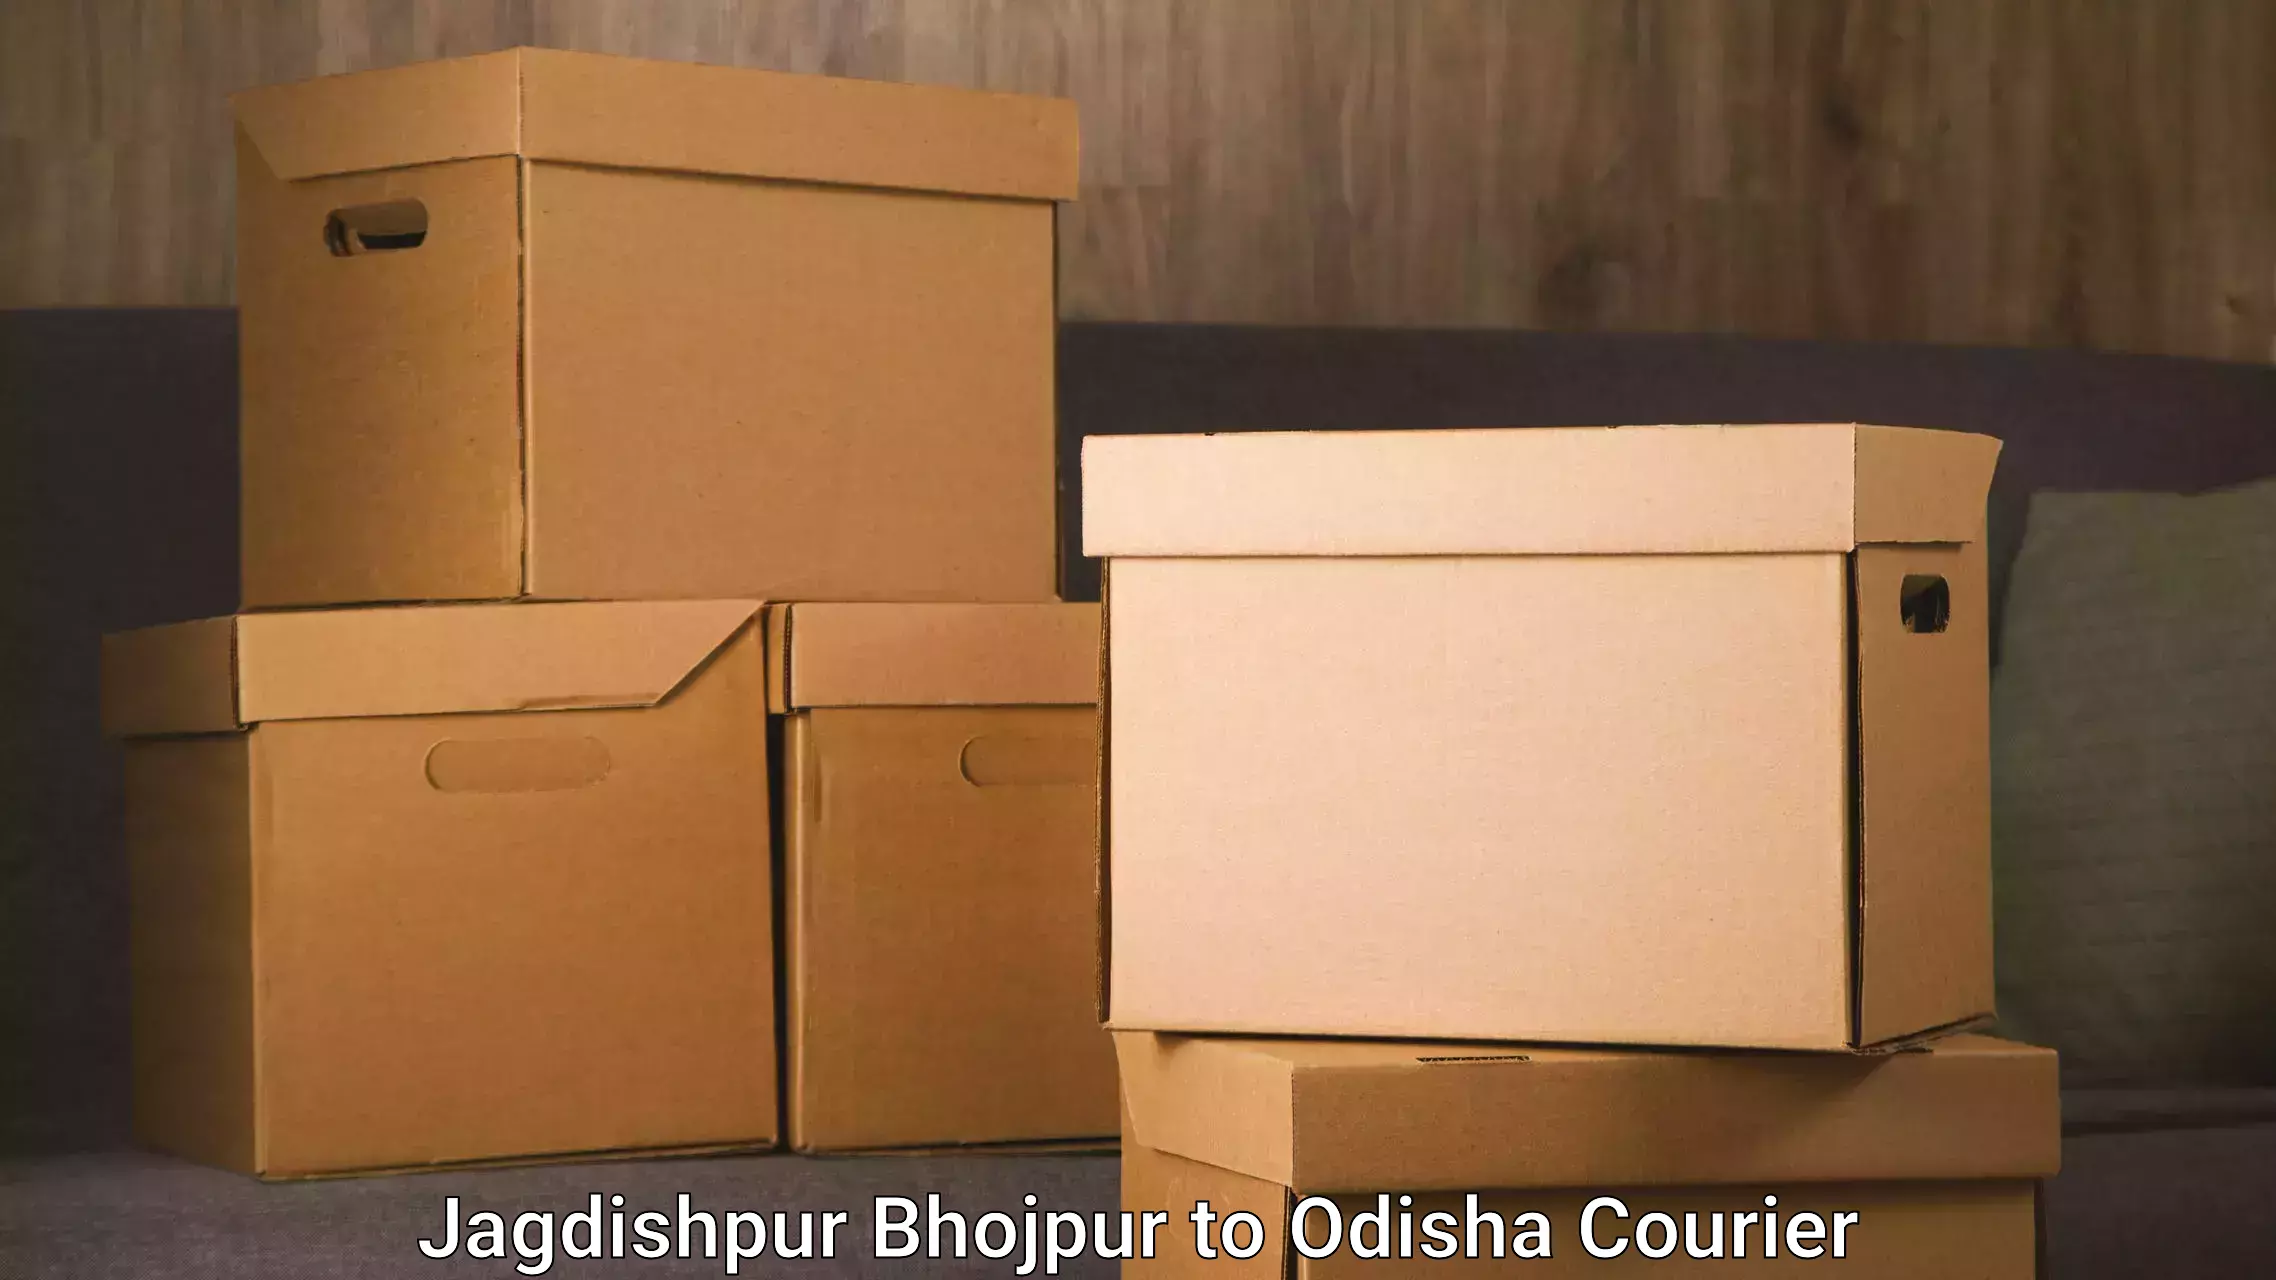 Trusted relocation experts Jagdishpur Bhojpur to Nimapara